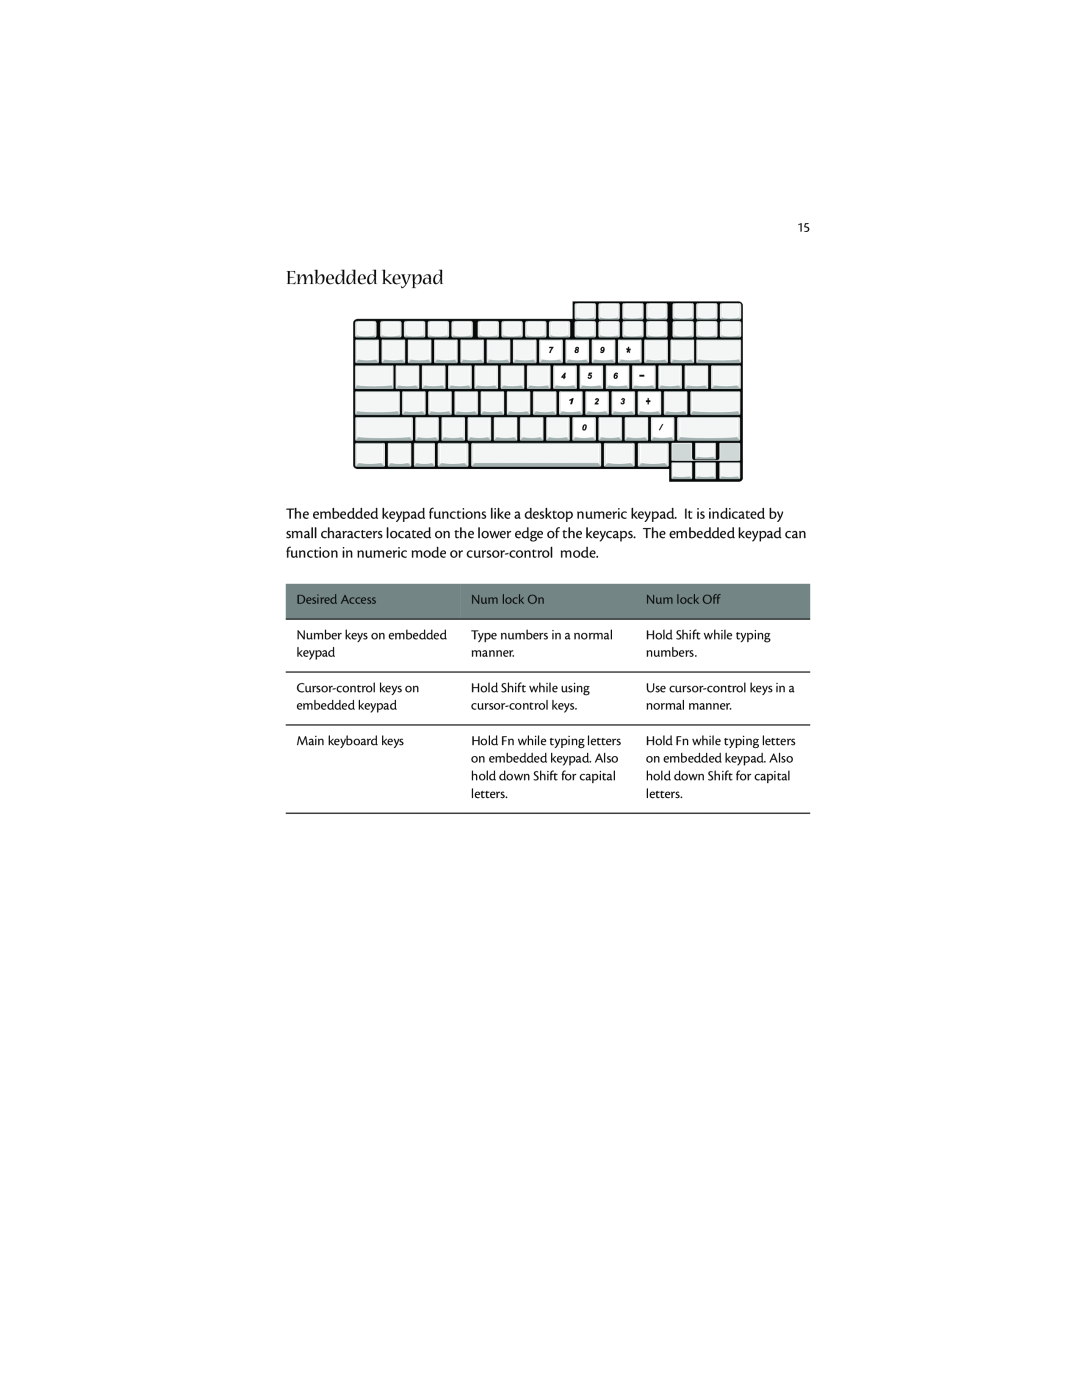 Acer 1400 manual Embedded keypad 